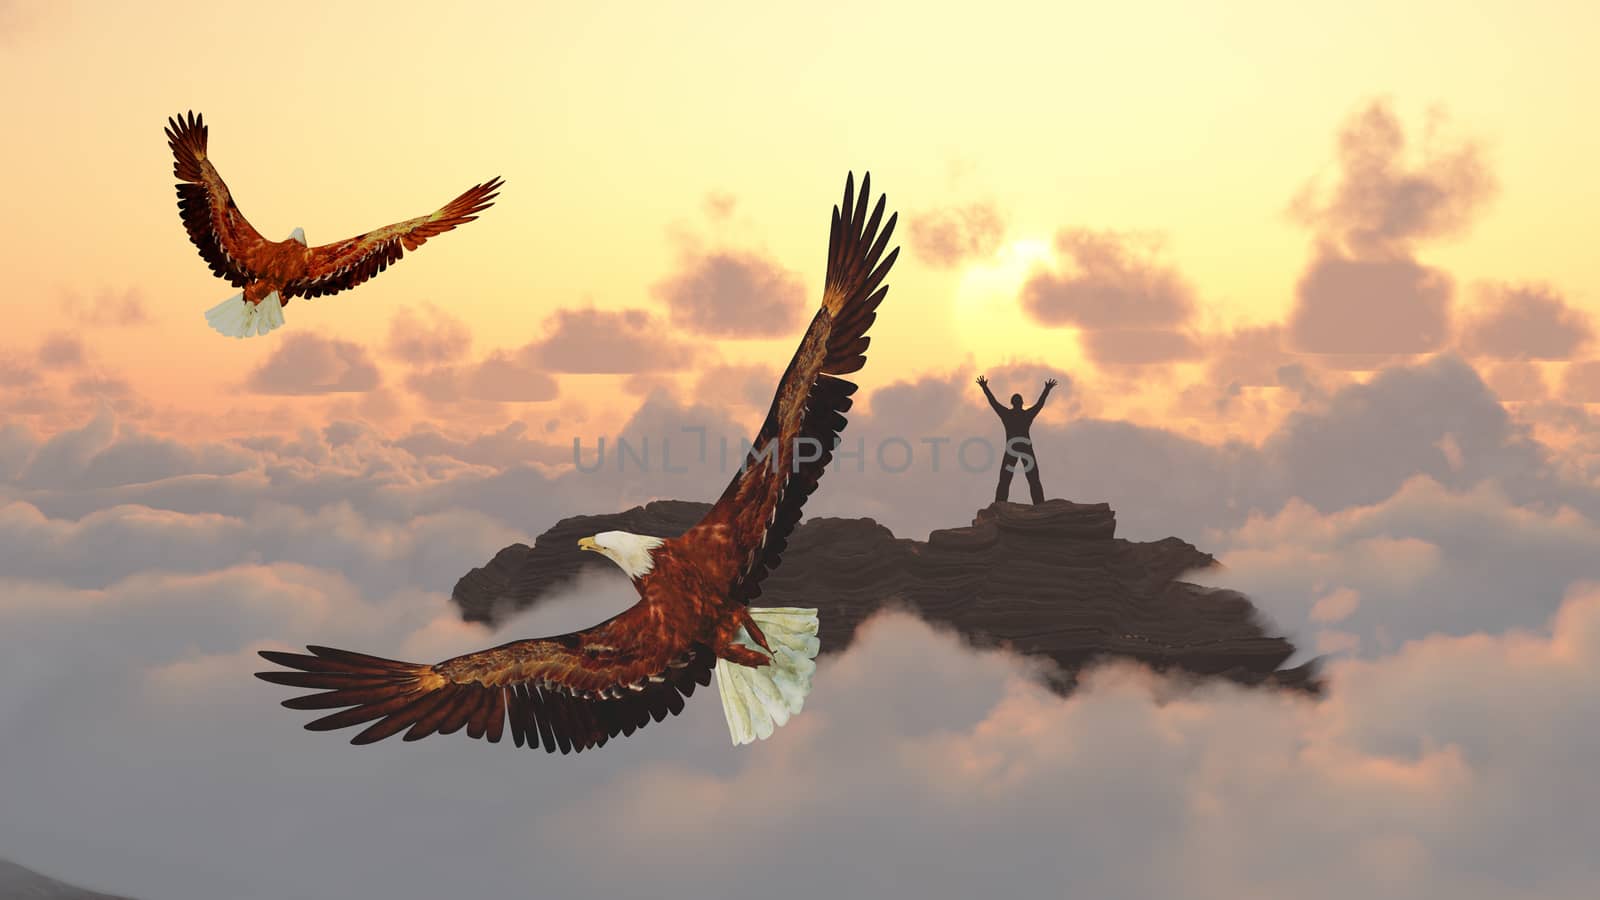 Man meets sunrise. Eagle flies.